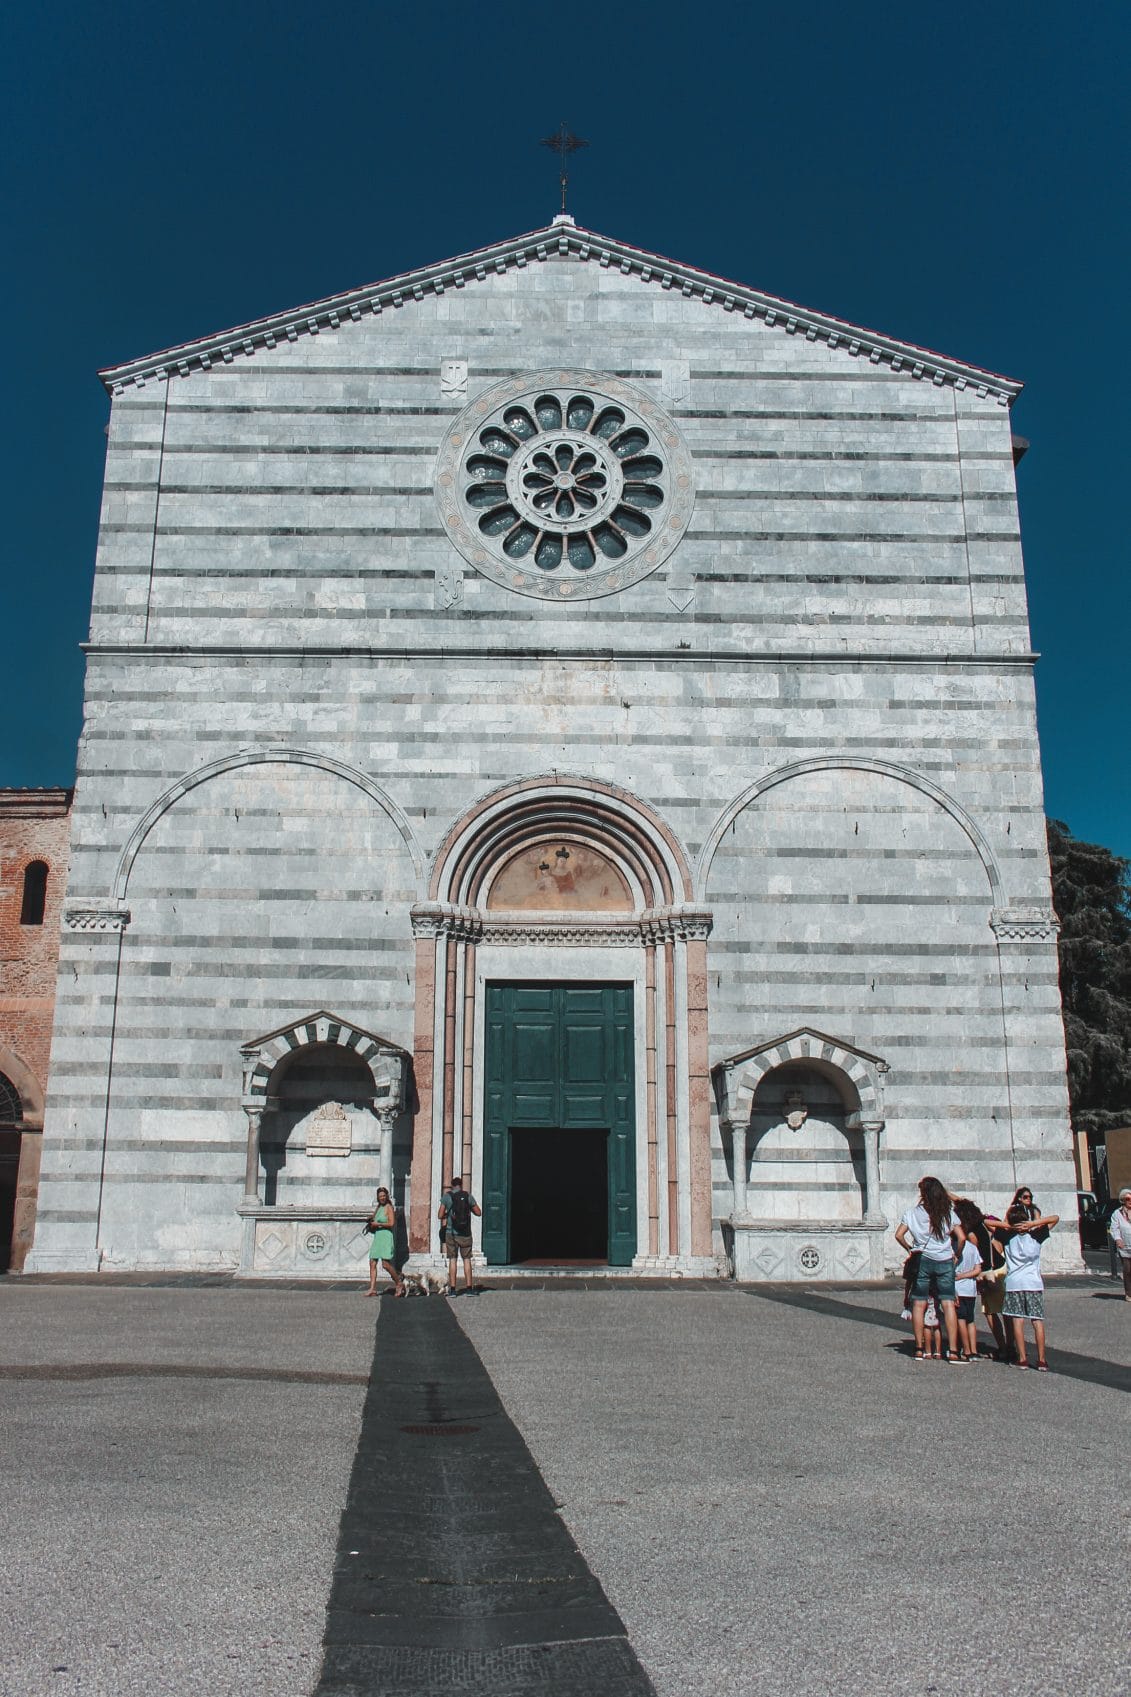 Chiesa di Santa Maria della Spina,Igreja Santa Maria Della Spina, Santa Maria Della Spina